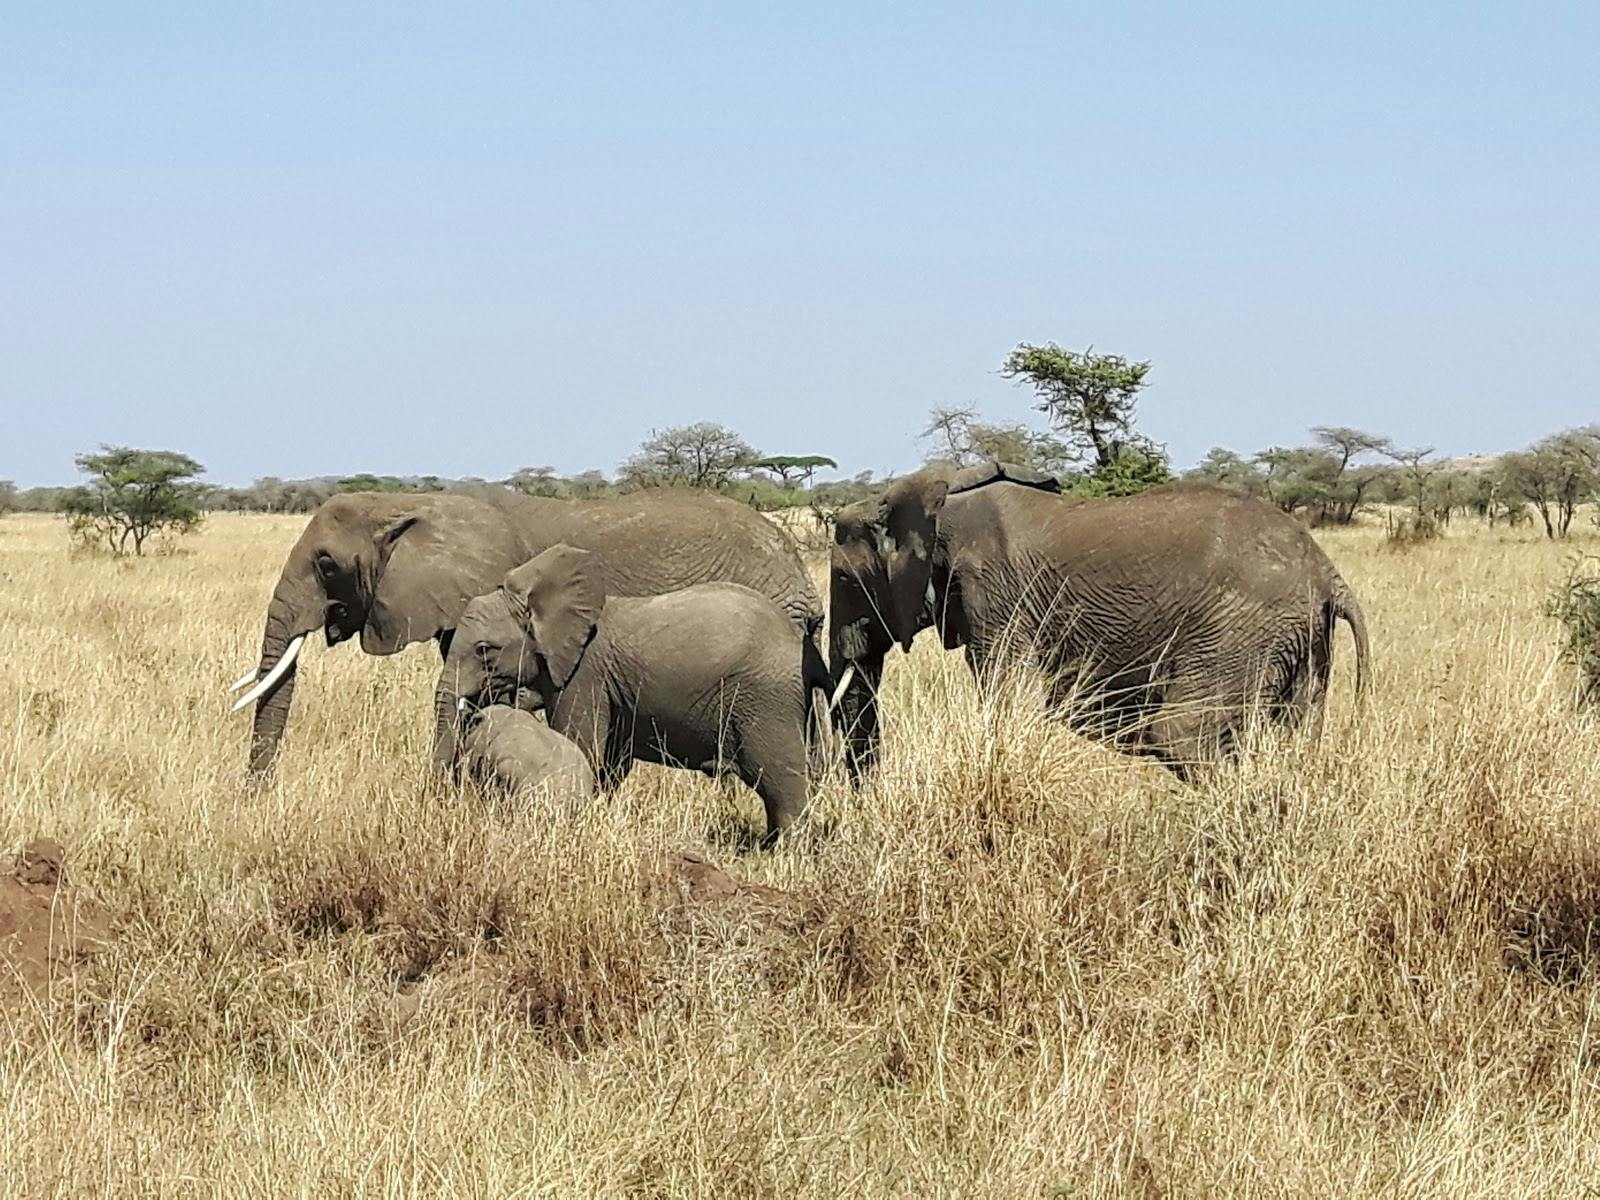 Image - Serengeti National Park